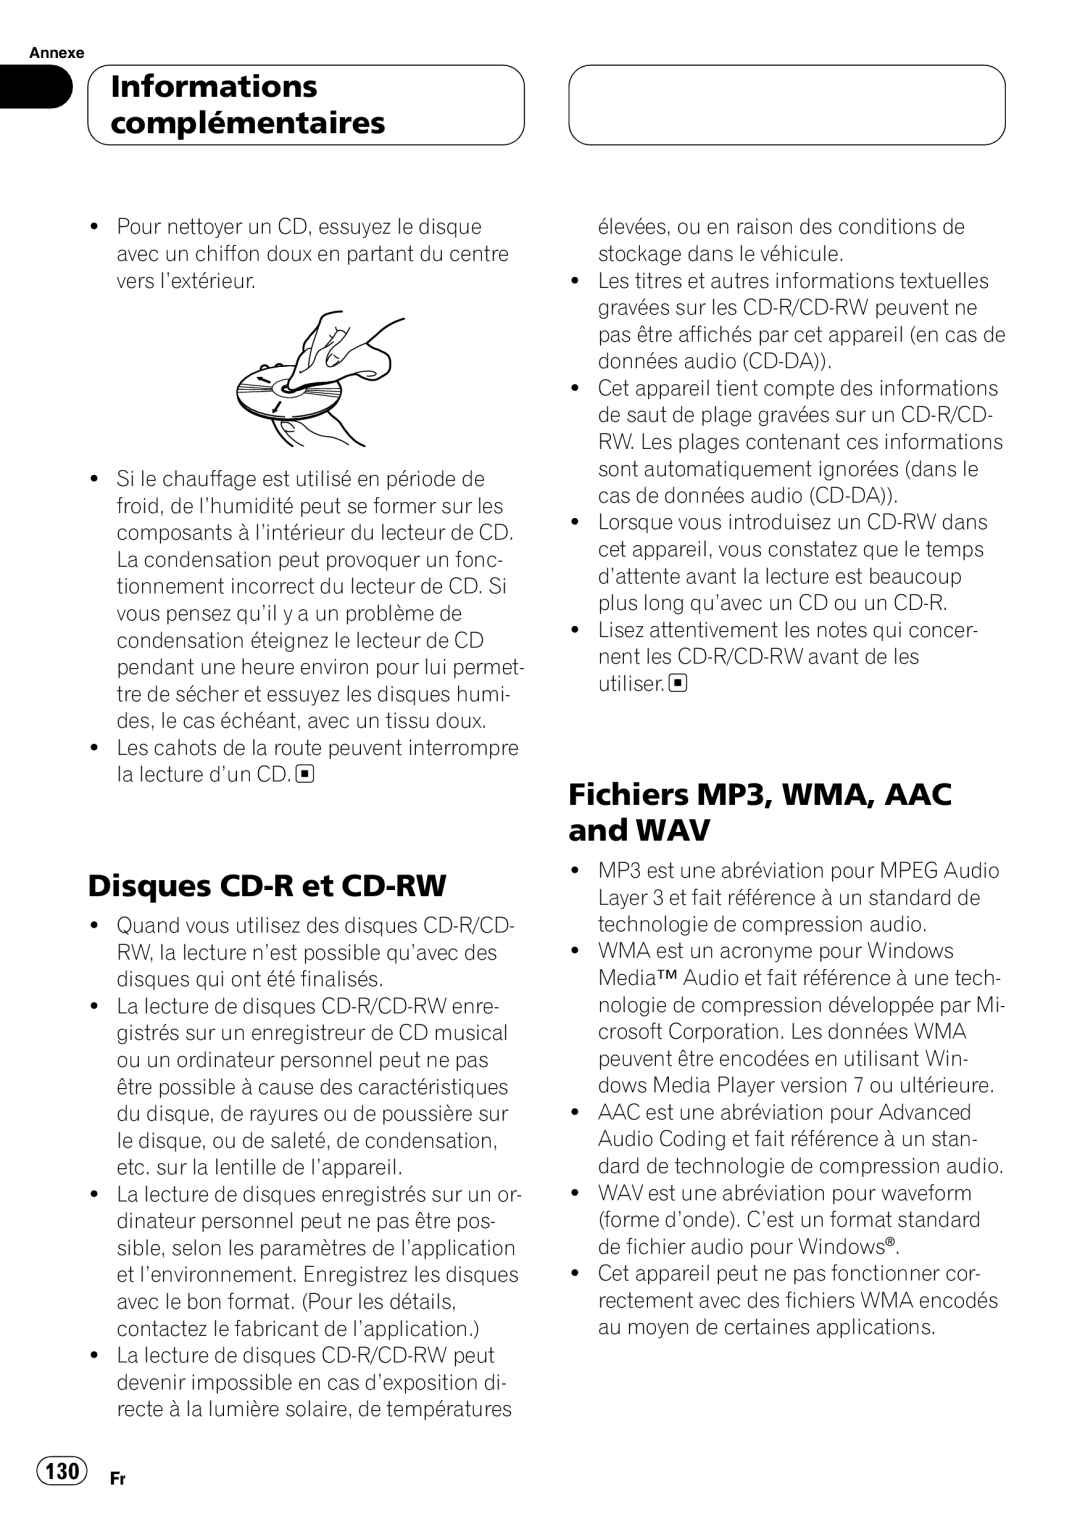 Pioneer DEH-P7700MP operation manual 